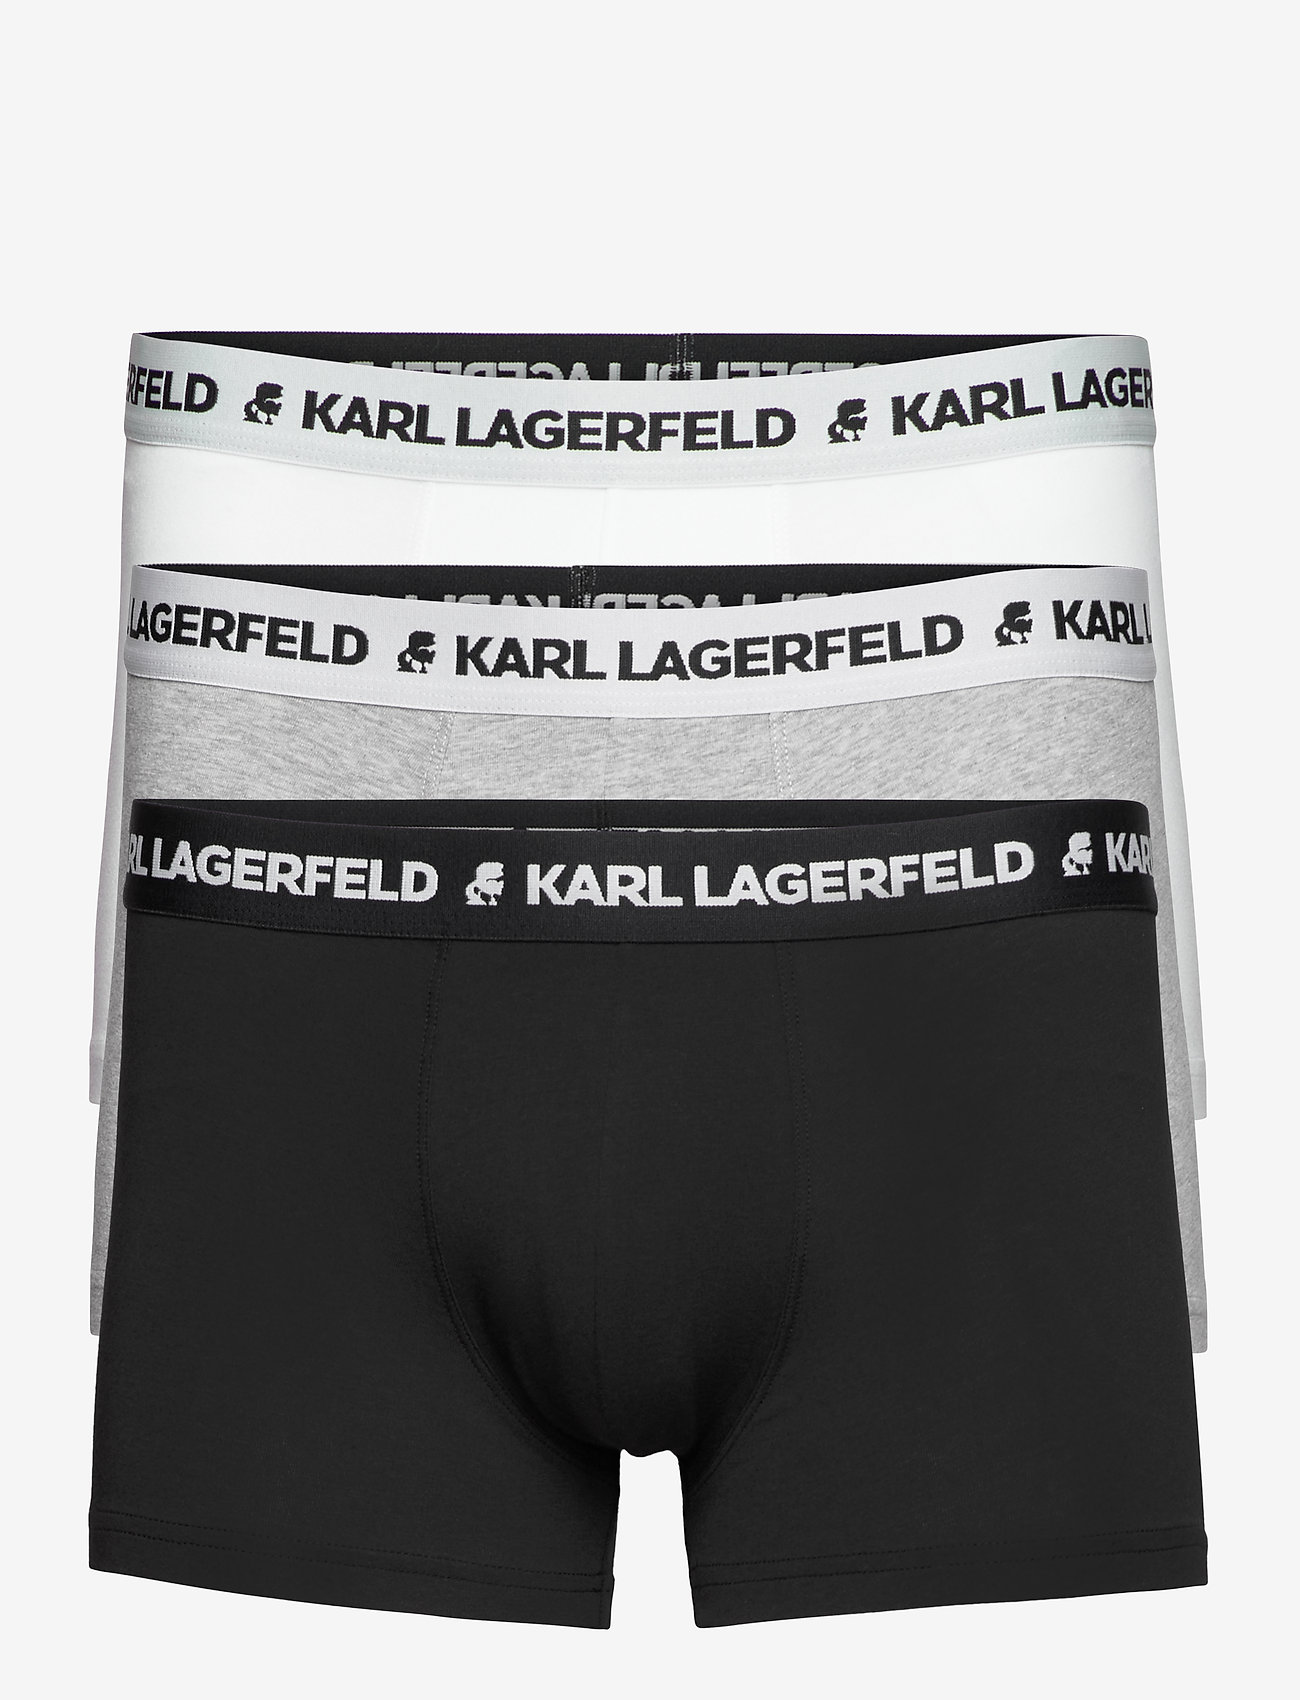 Karl Lagerfeld boxershorts hvid/grå/sort 3 par